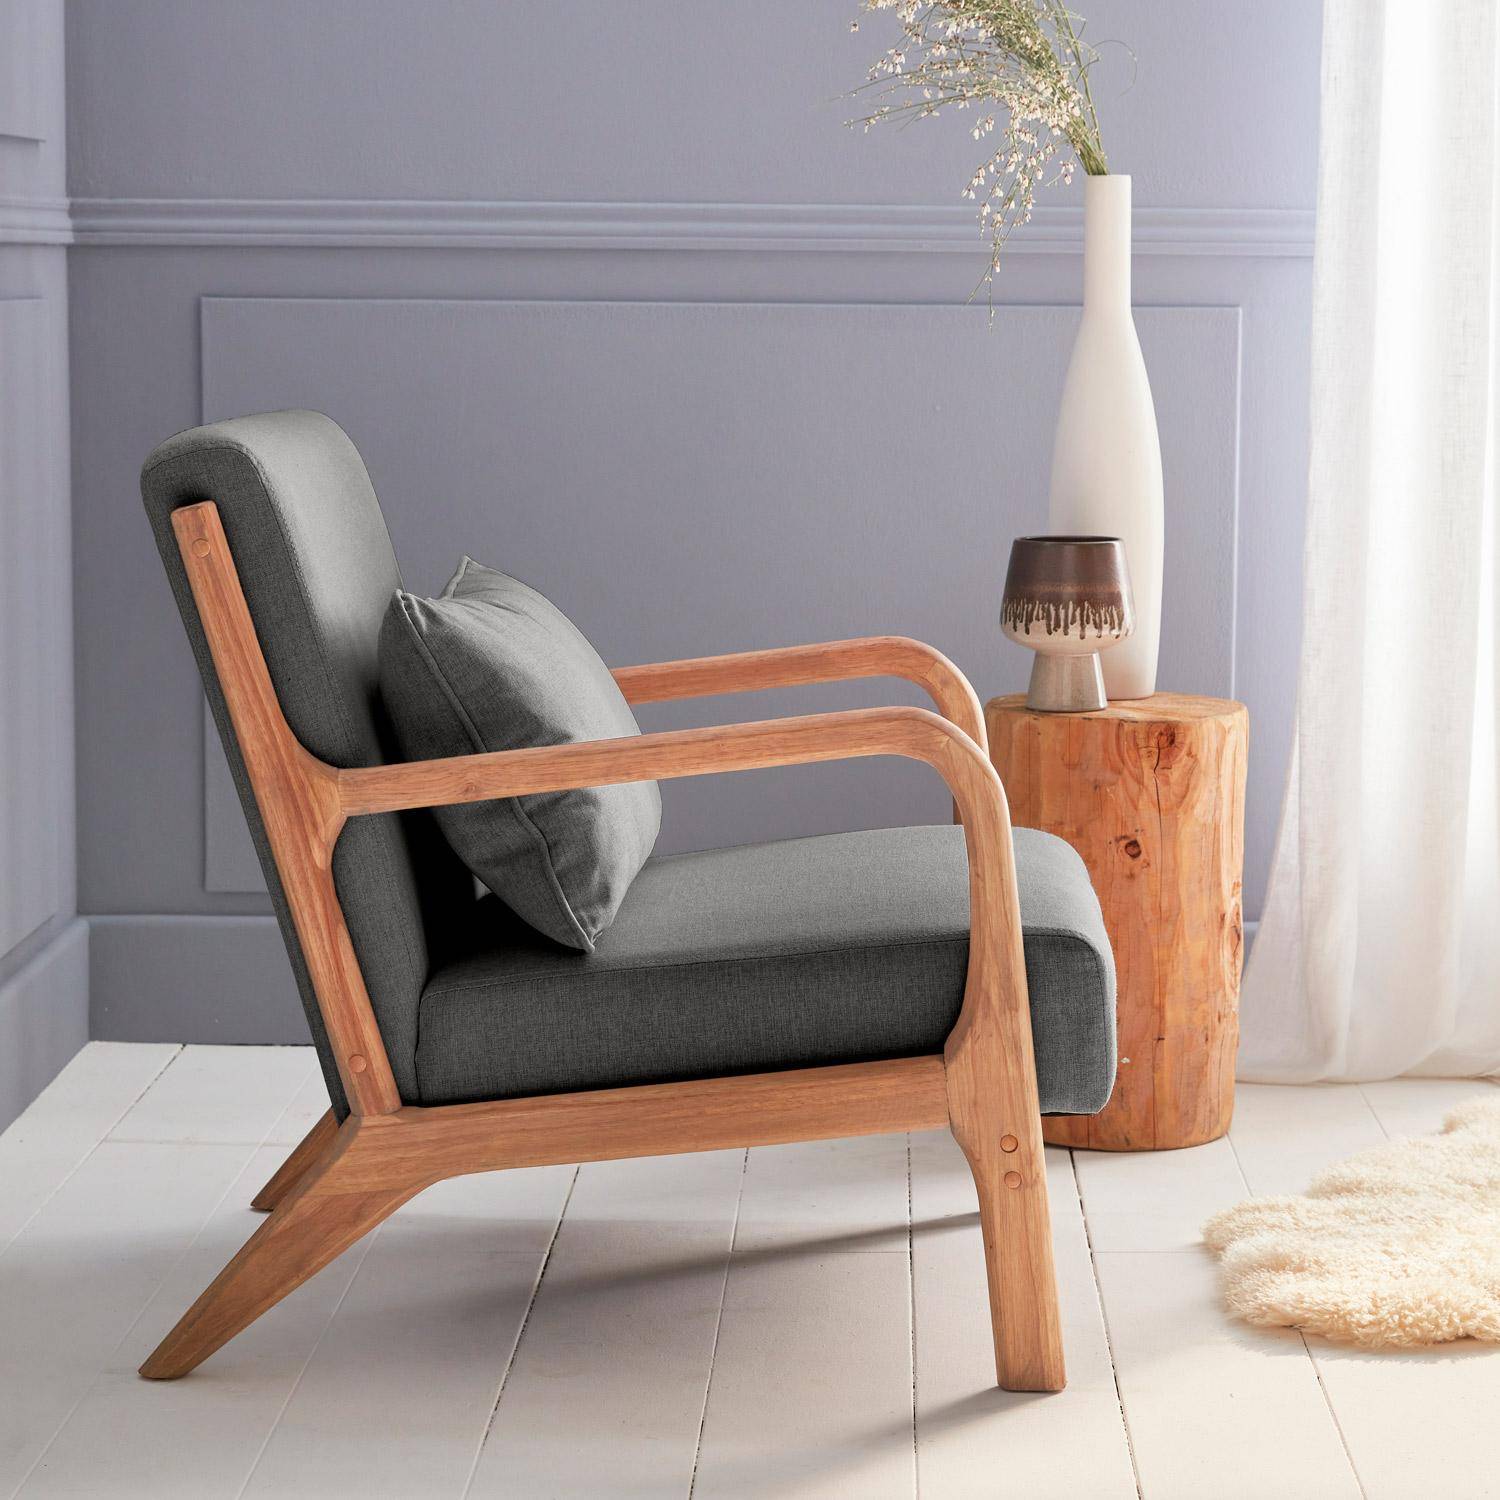 Sillón de diseño de madera y tela, 1 asiento recto fijo, patas de compás escandinavas, armazón de madera maciza, asiento cómodo, gris oscuro,sweeek,Photo2